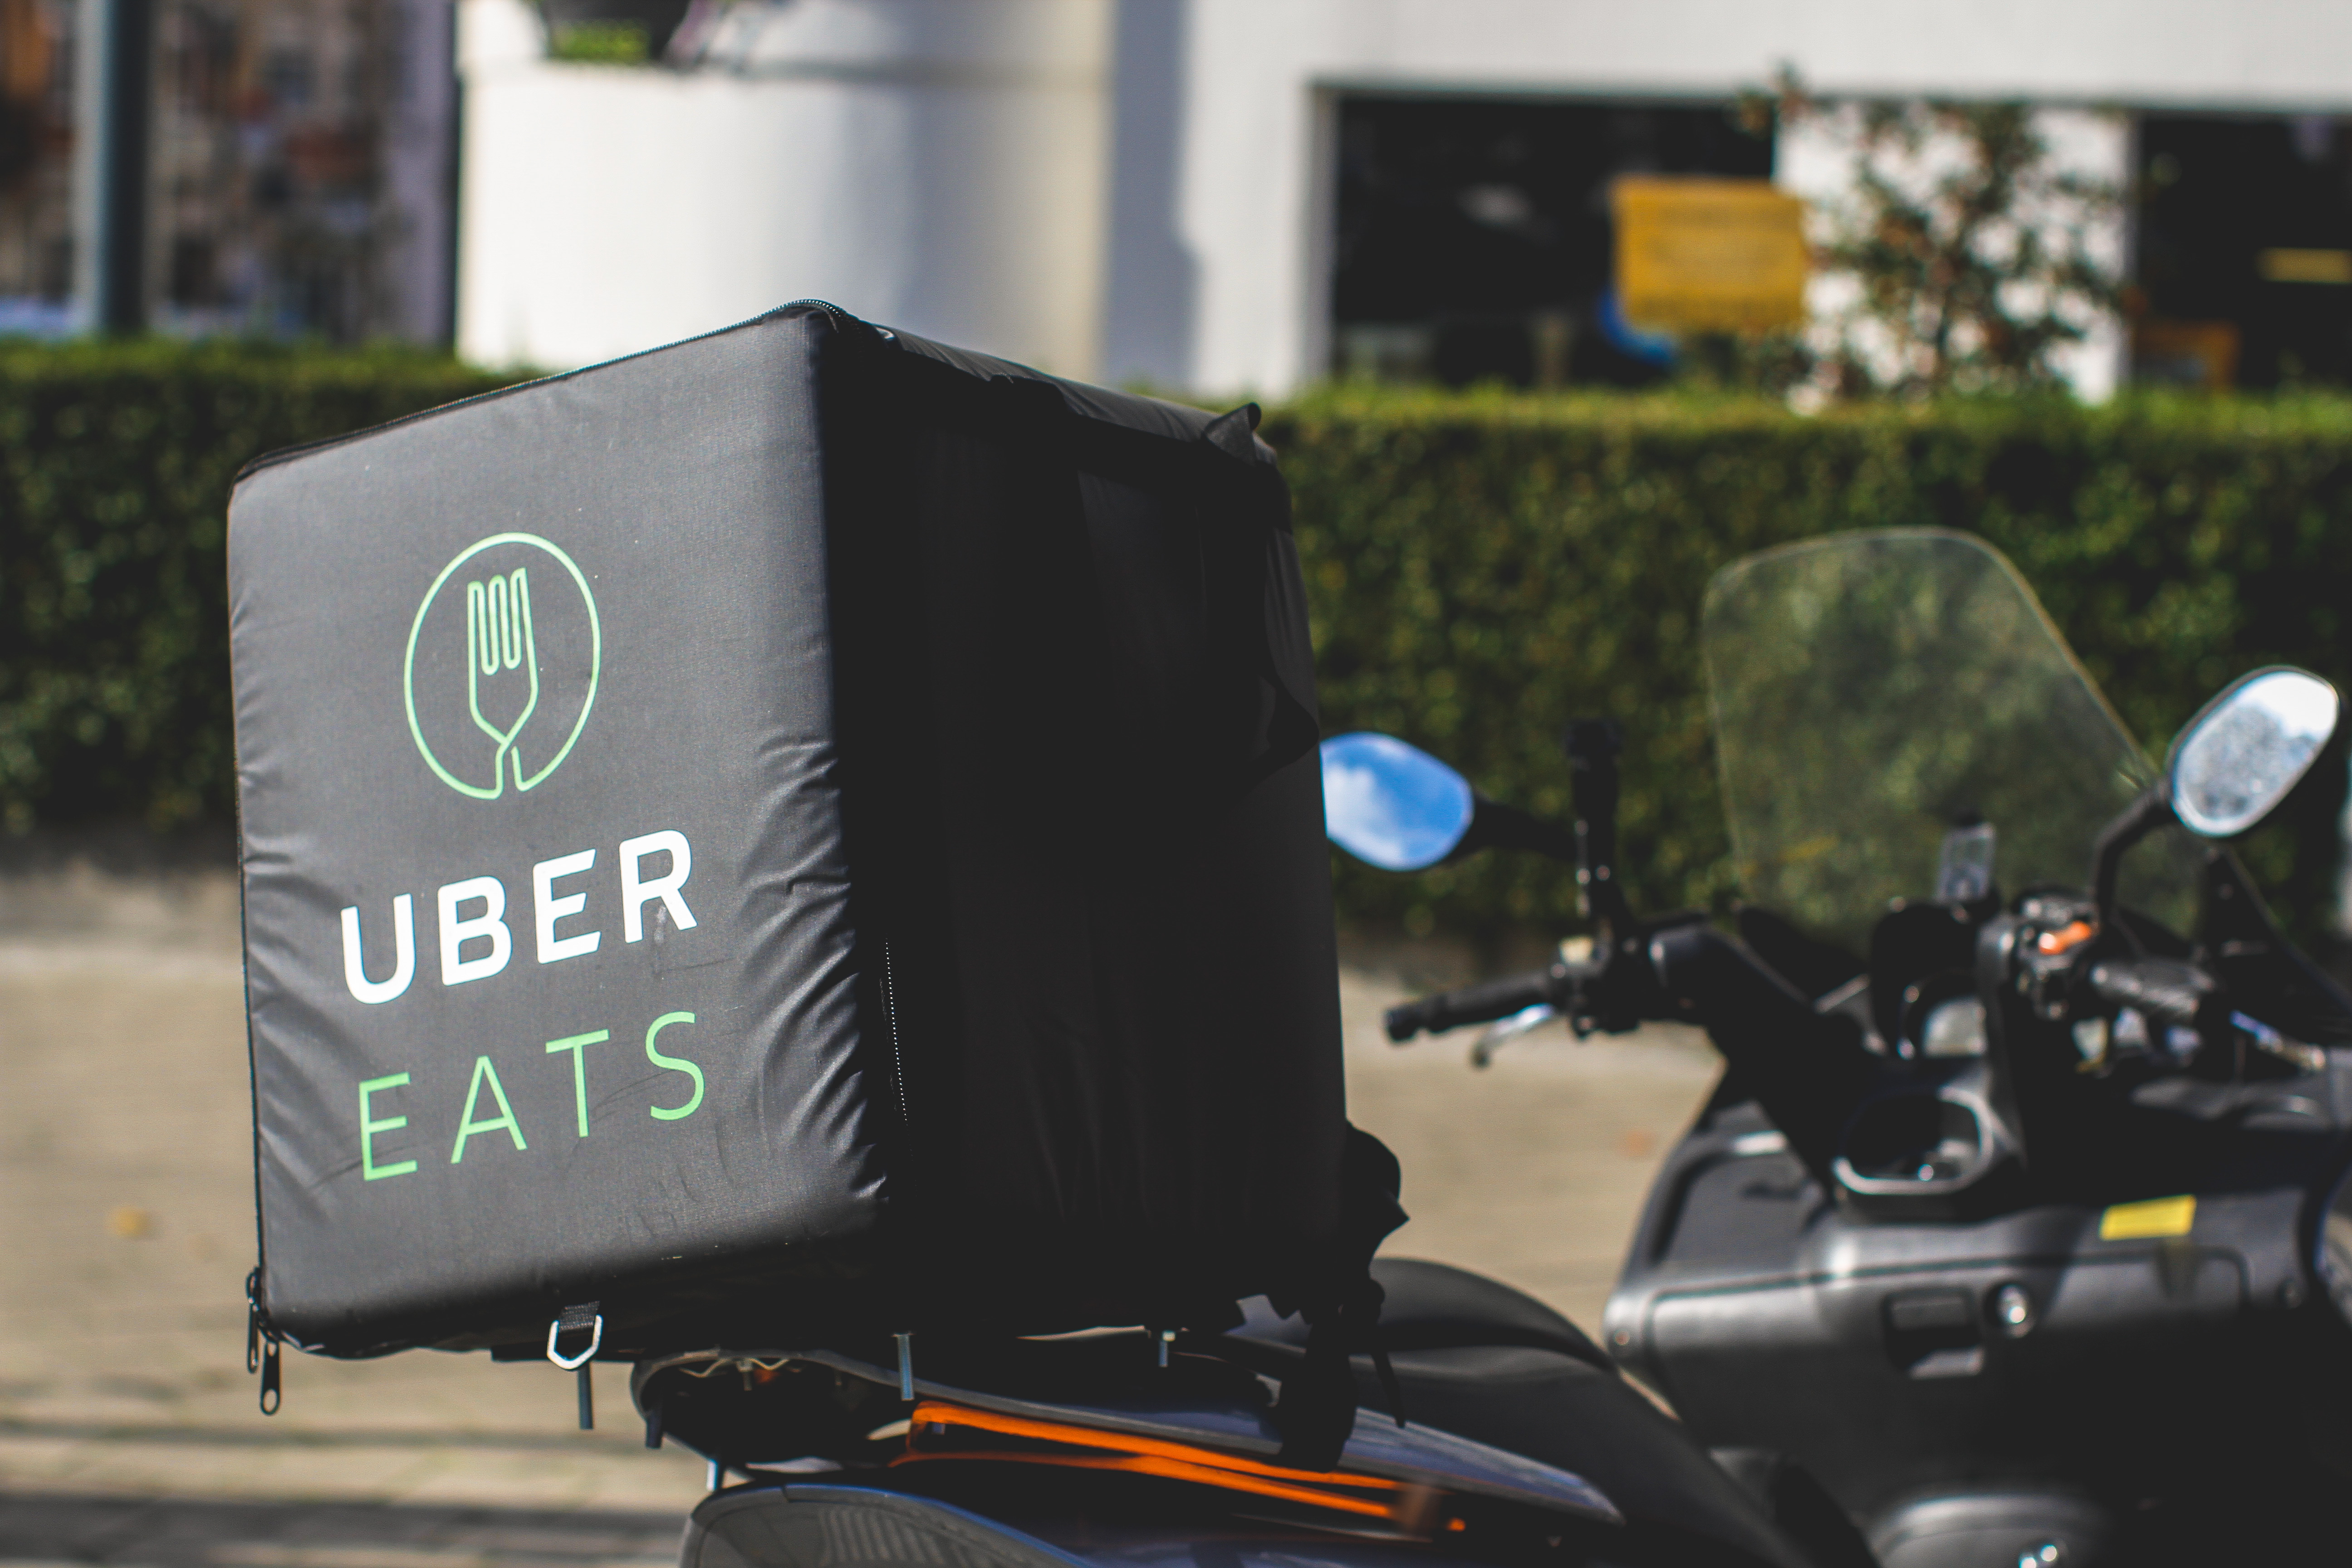 UberEats love Motorcycles